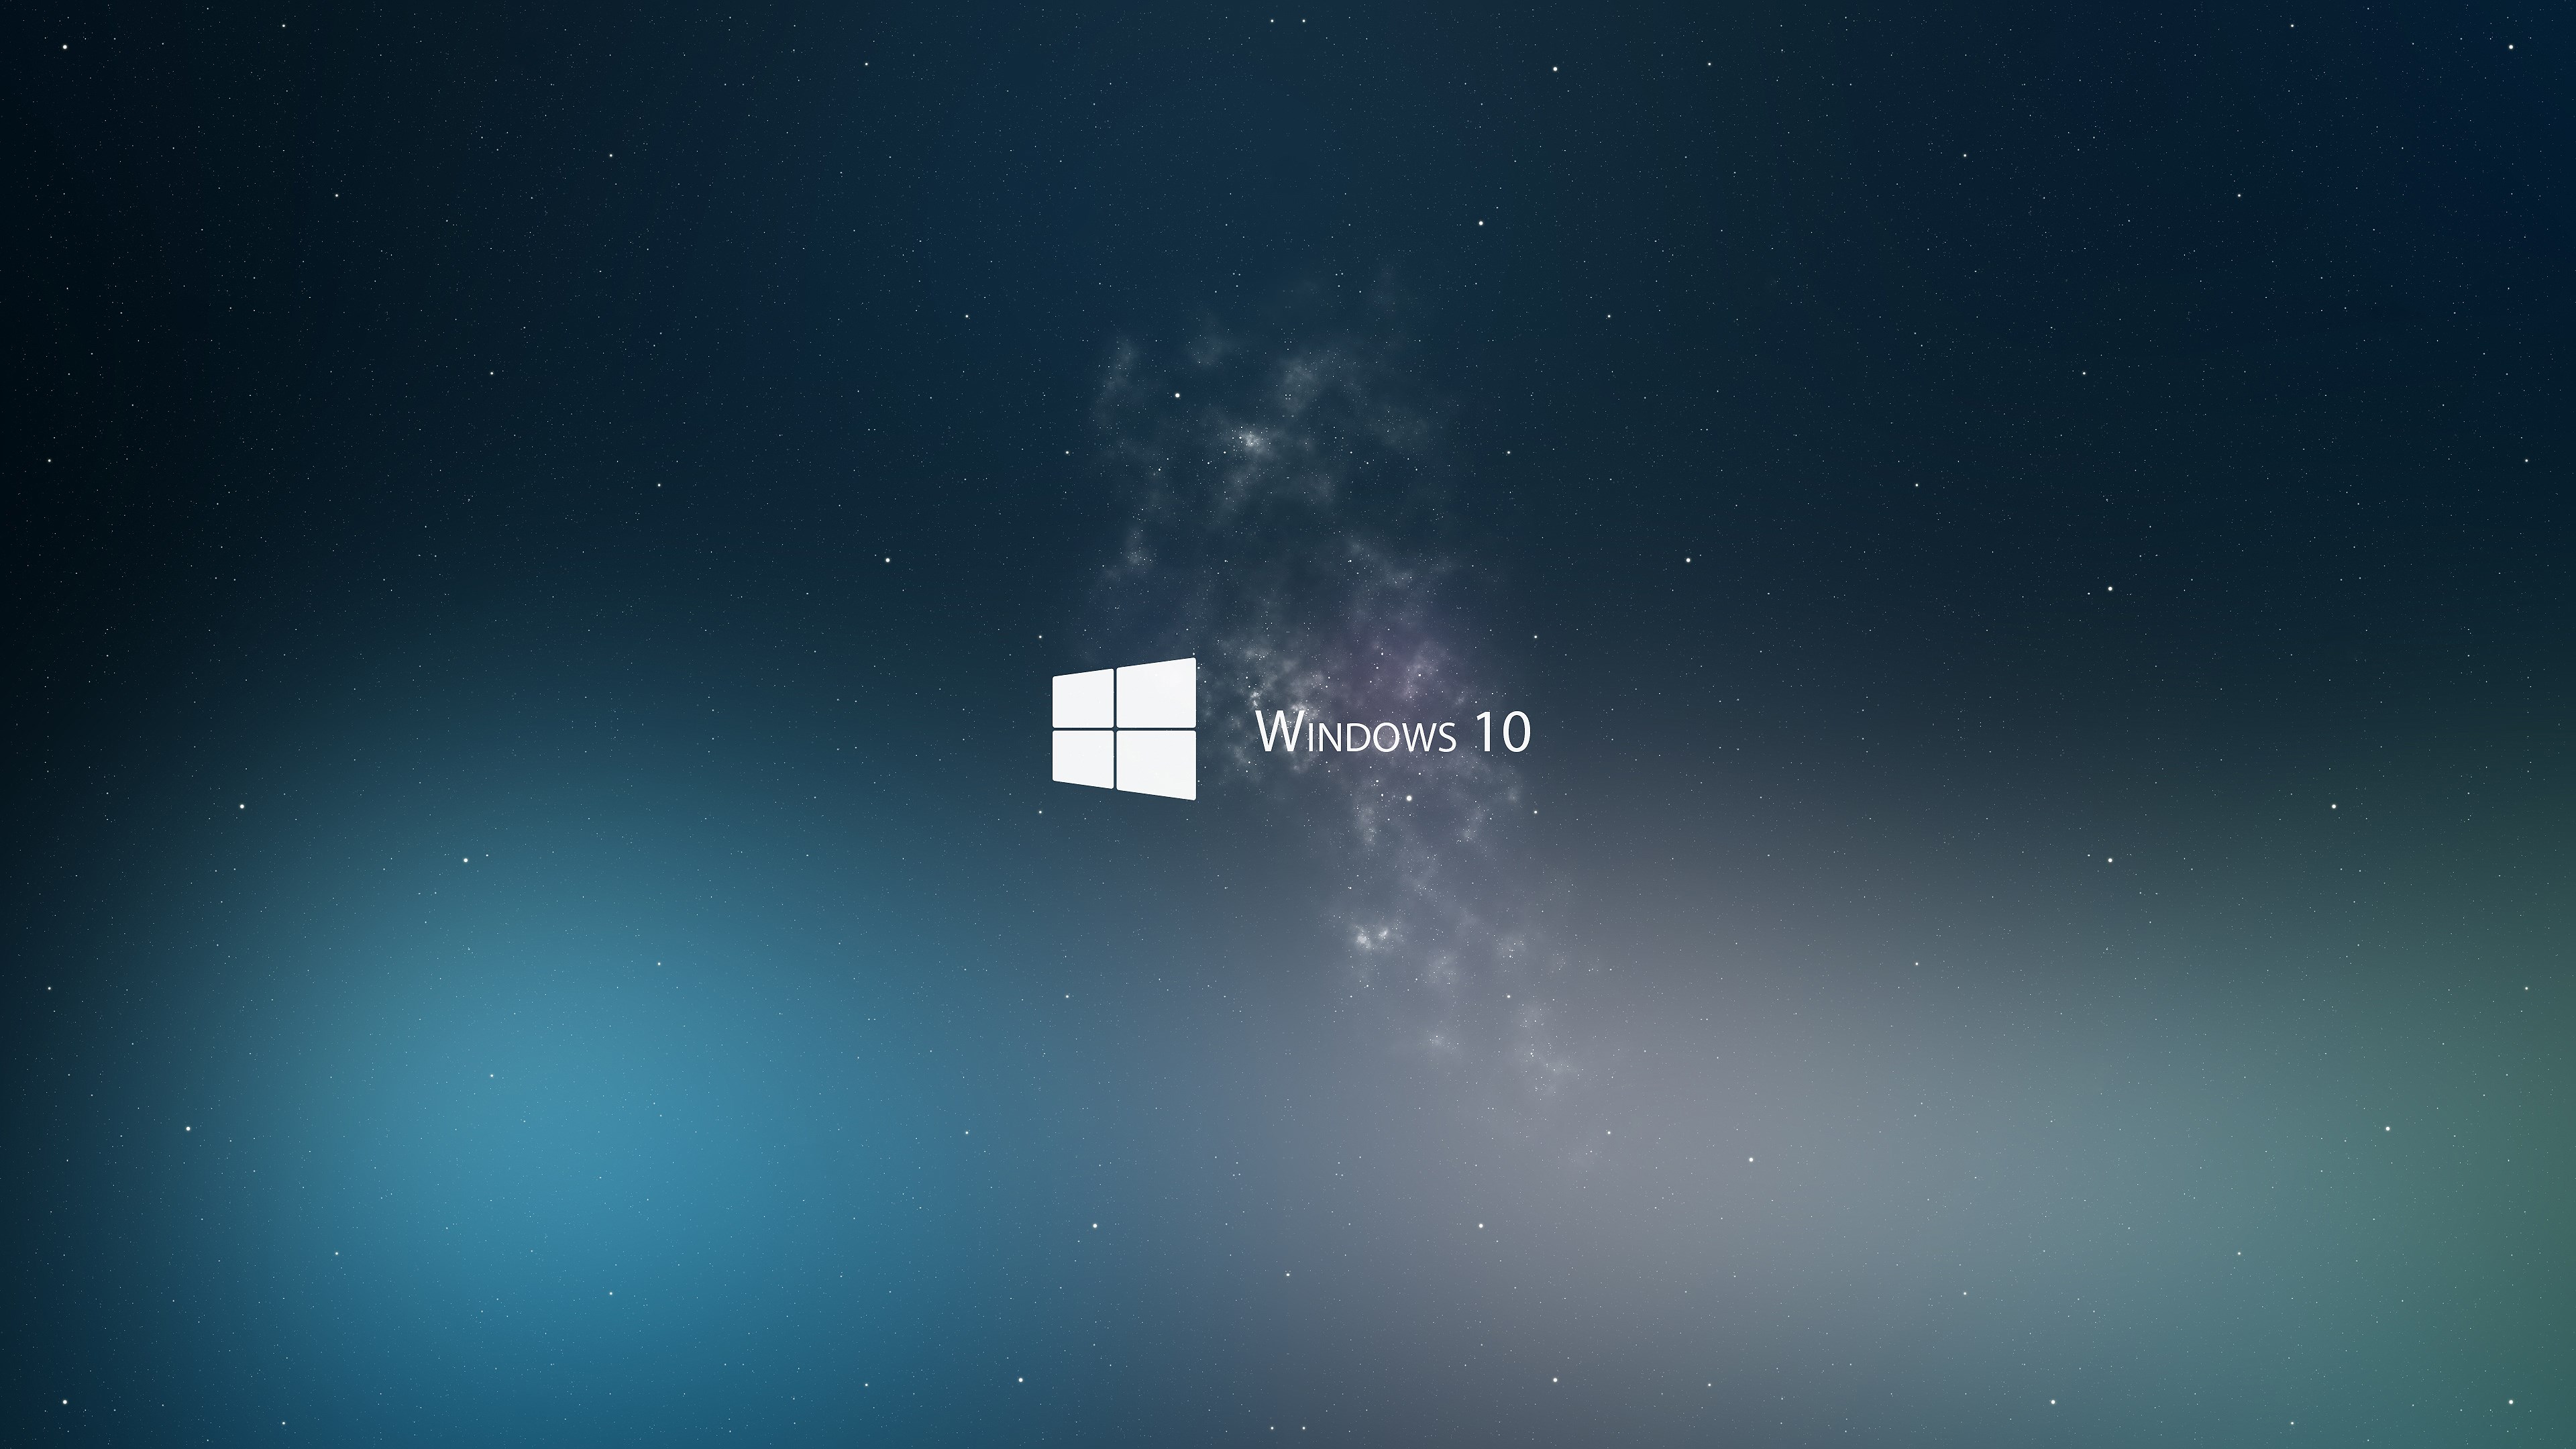 Windows 10 HD photos